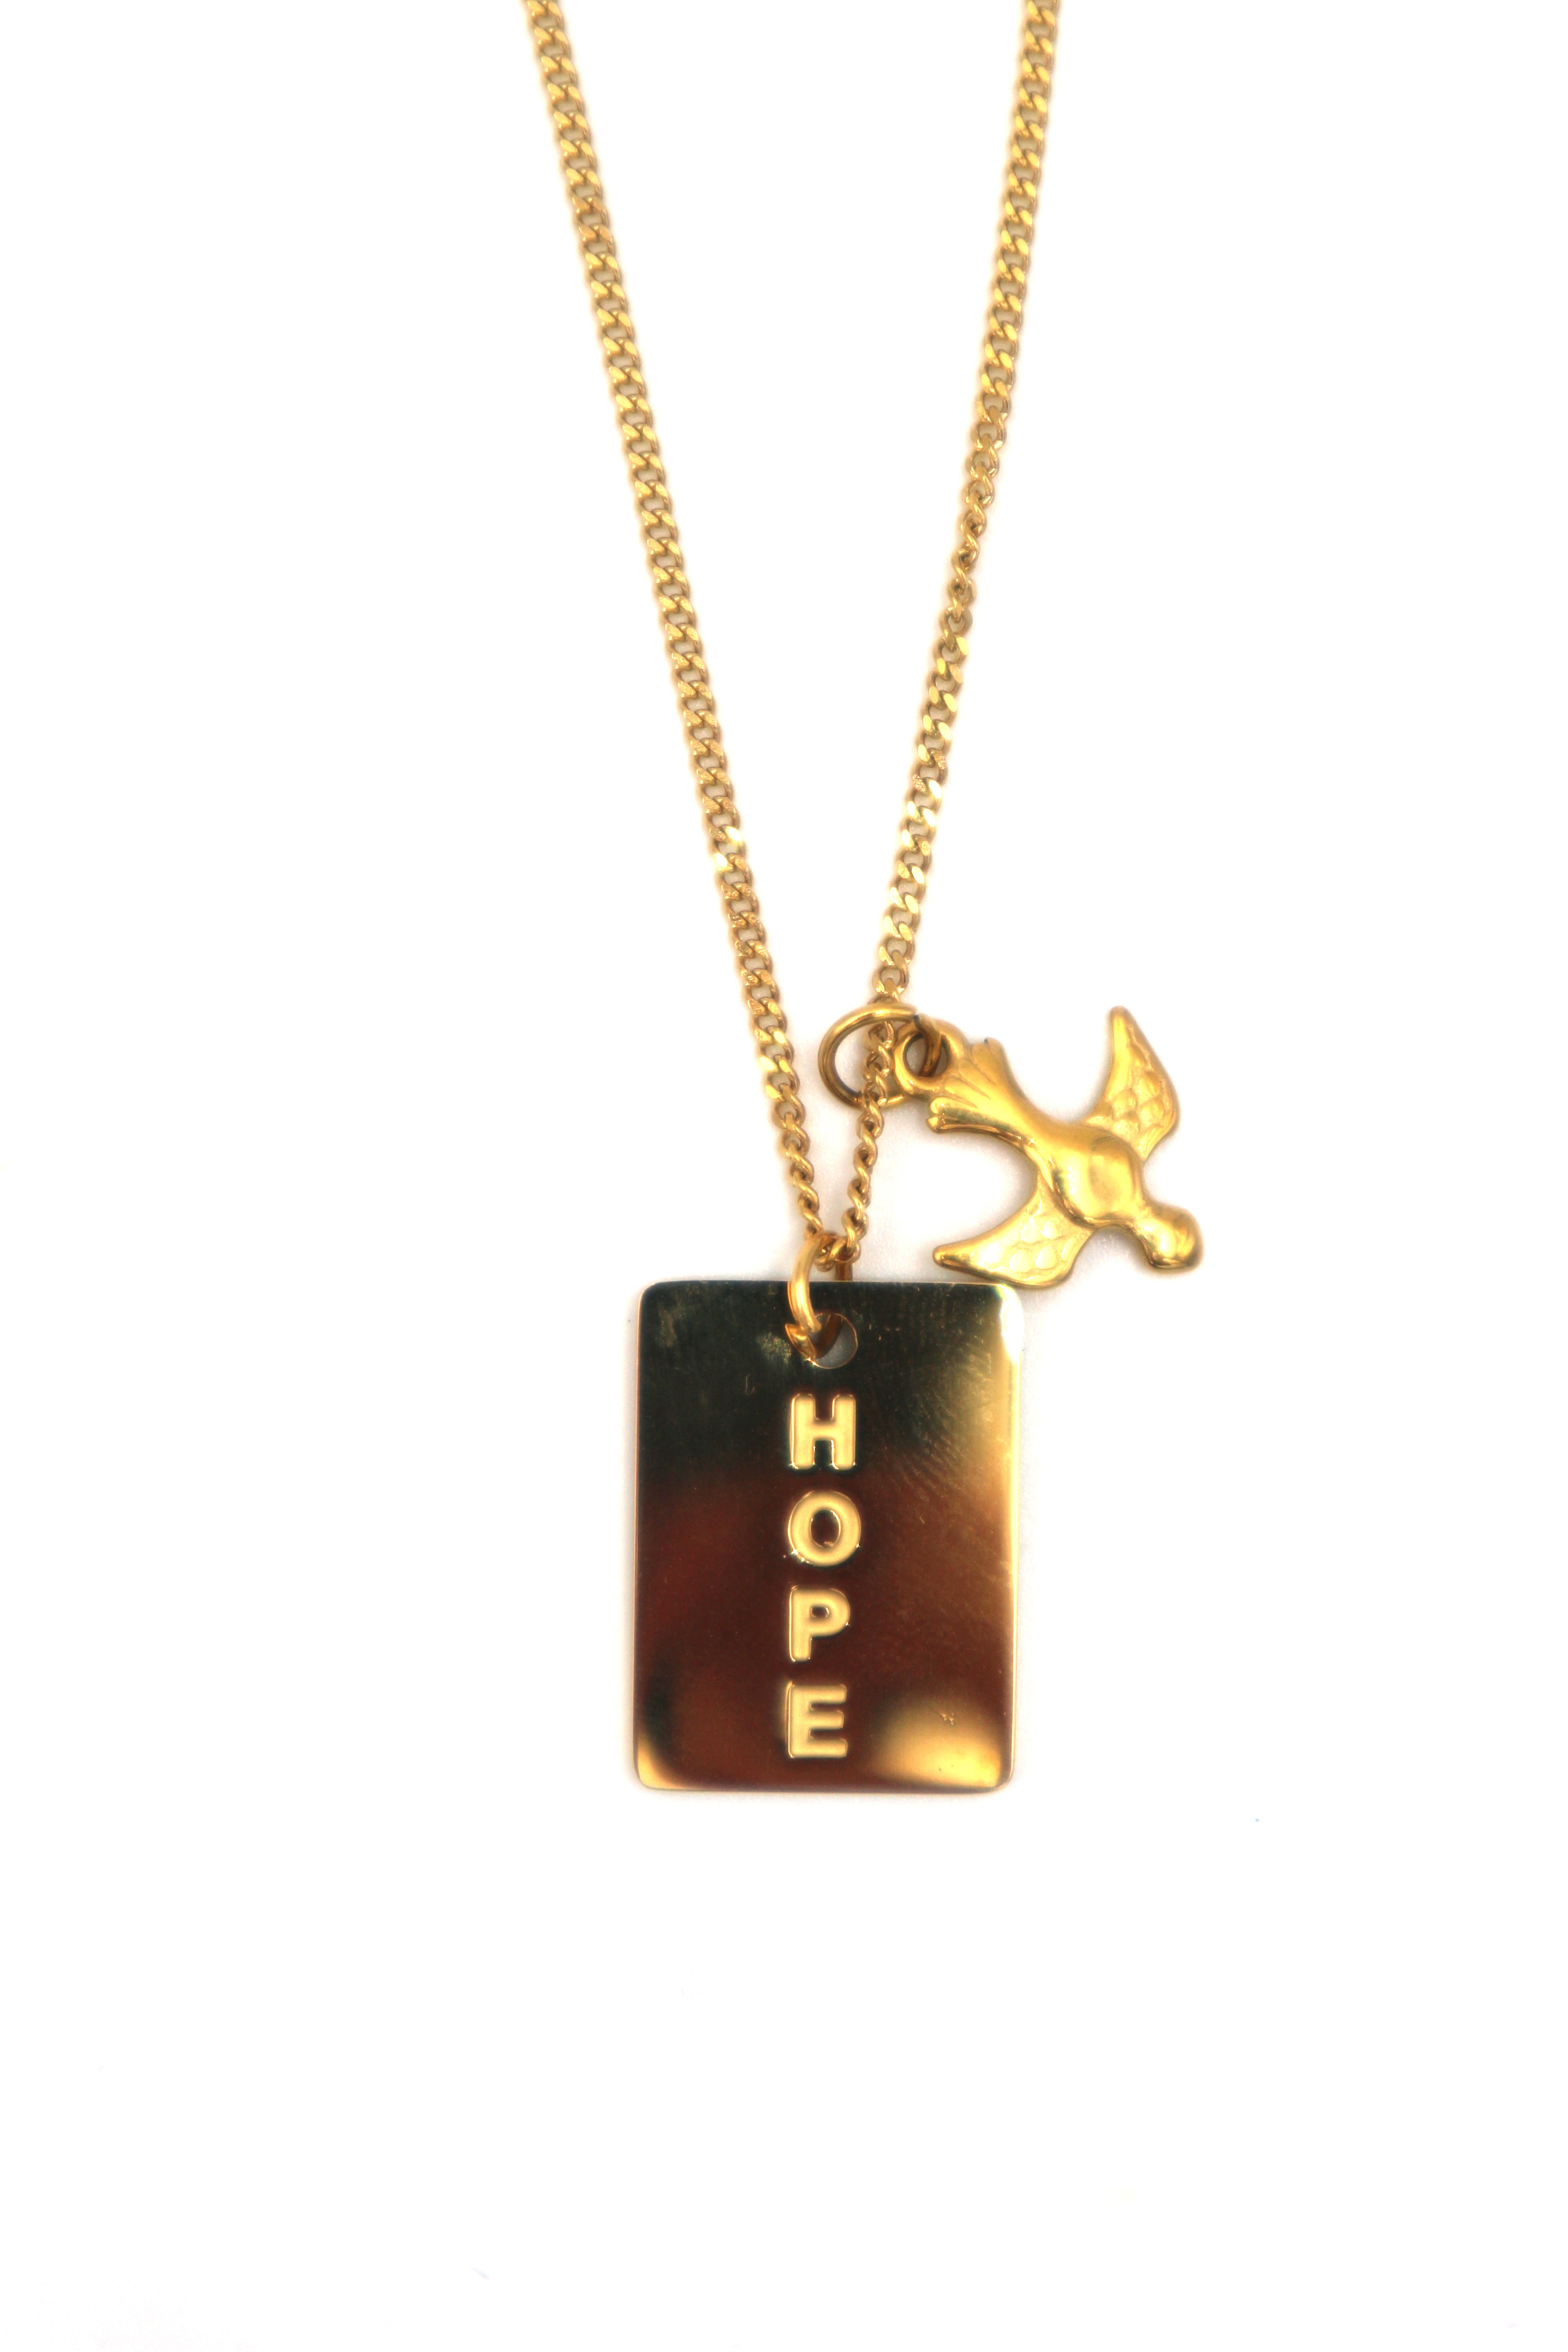 HOPE // The HOPE double-sided medallion